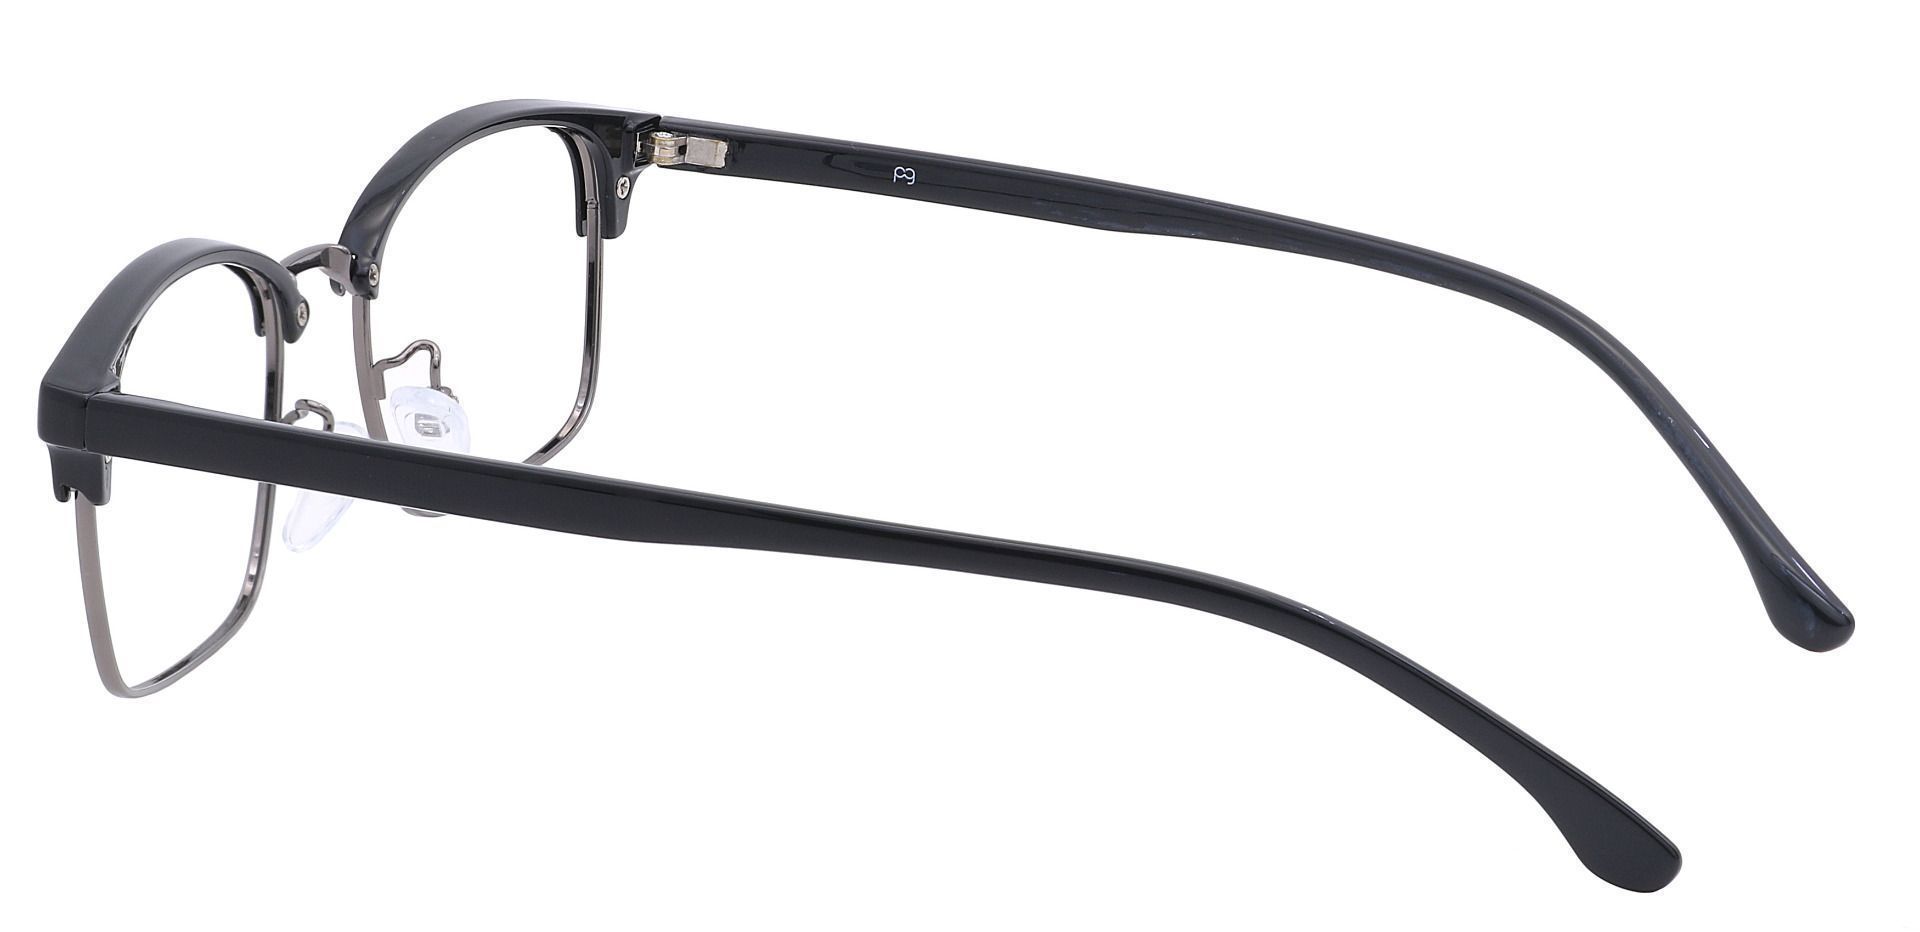 Clover Browline Lined Bifocal Glasses - Black